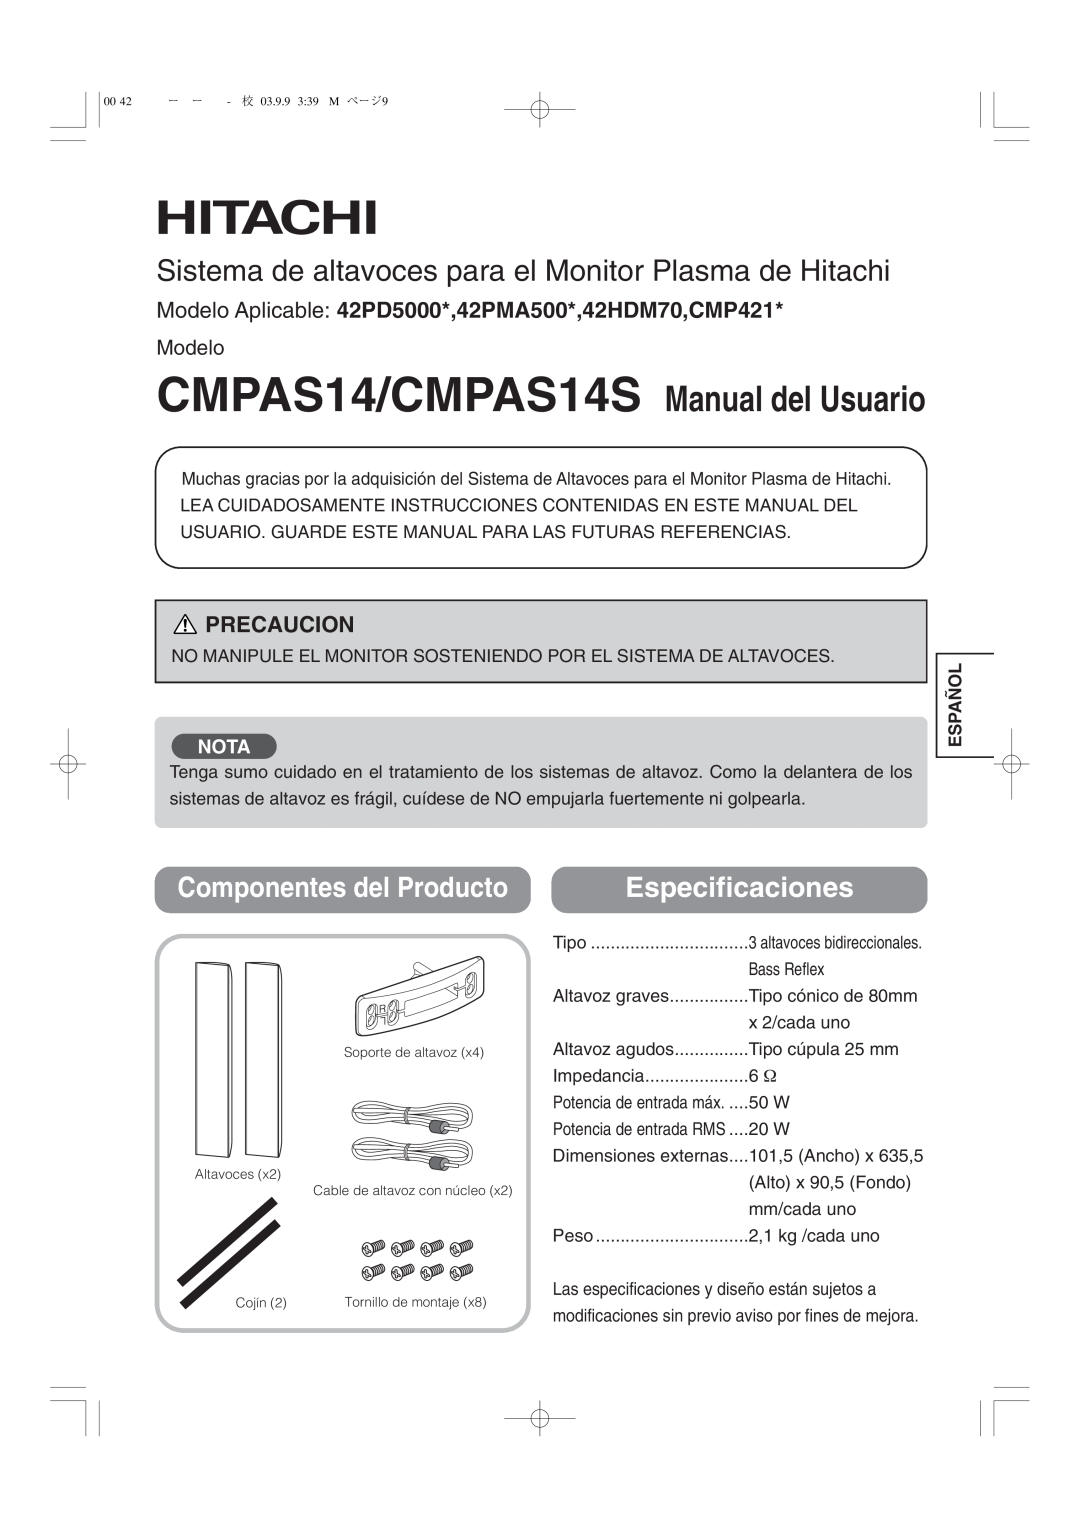 Hitachi 42PD5000 CMPAS14/CMPAS14S Manual del Usuario, Sistema de altavoces para el Monitor Plasma de Hitachi, Precaucion 